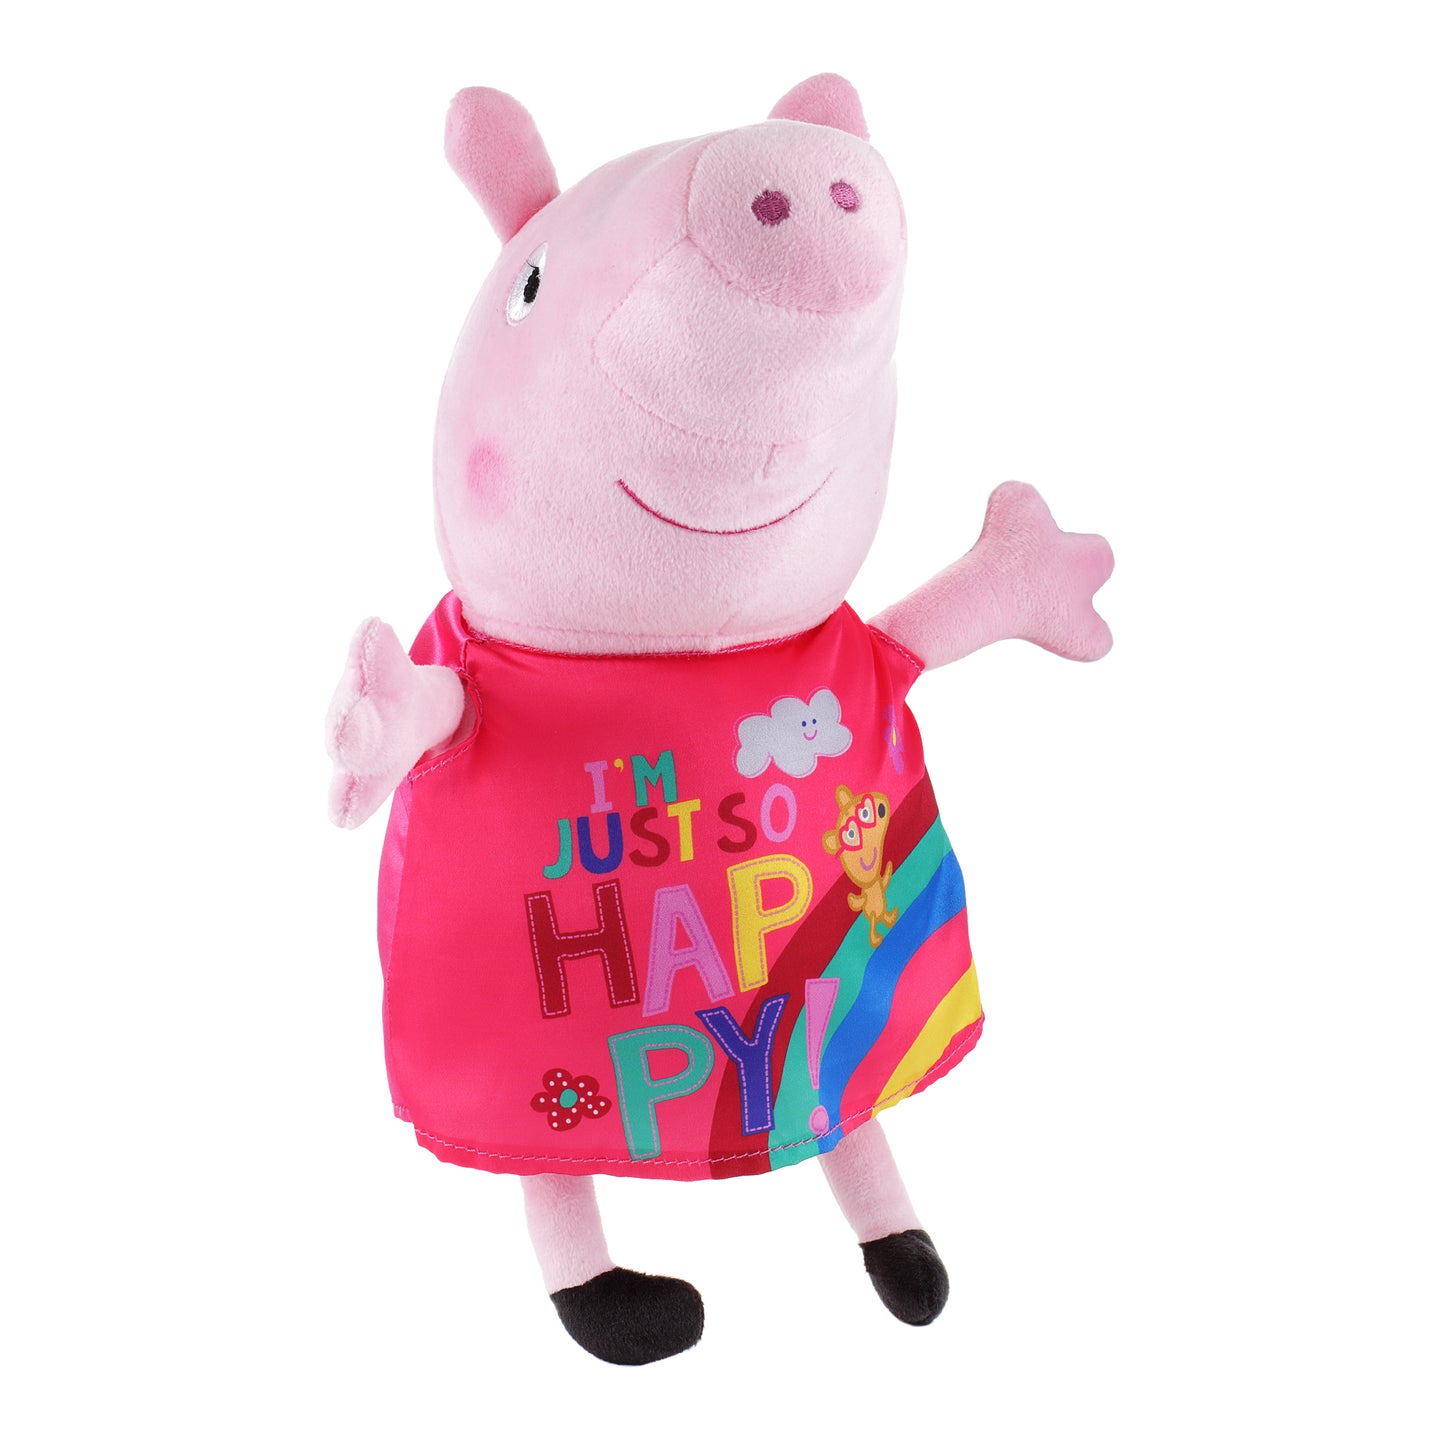 Peppa Pig Soft Plush Cuddly Toy 12